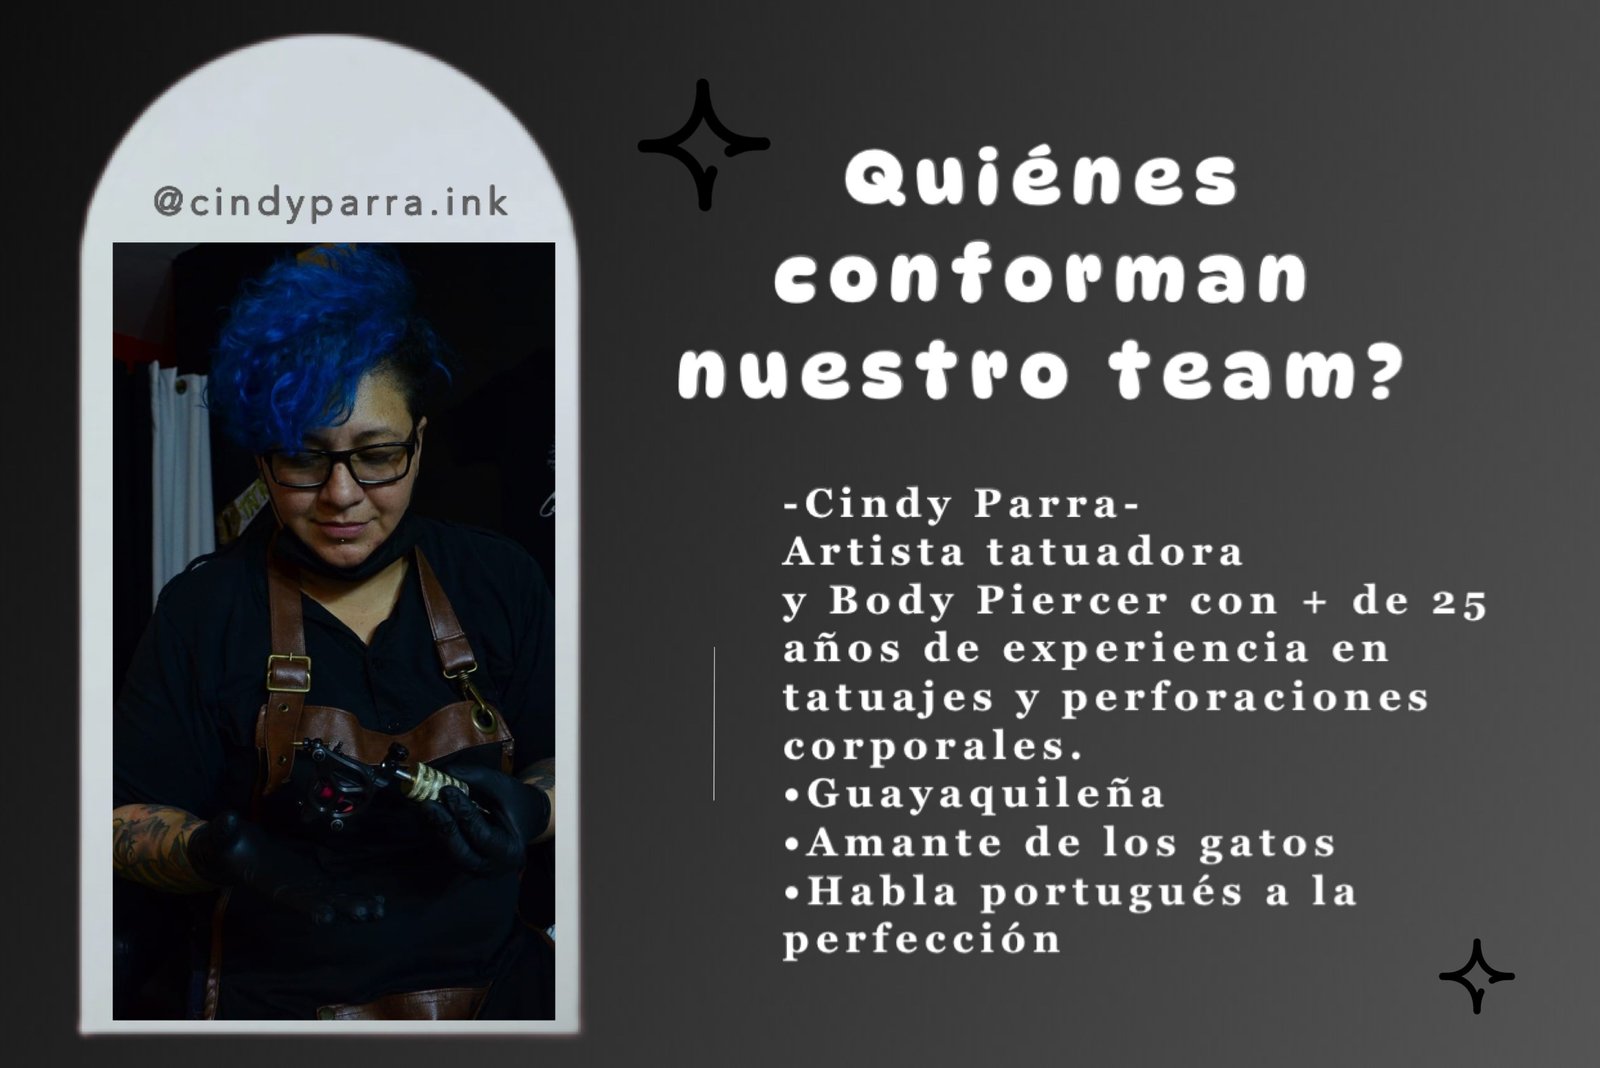 Team Estudio Cindy Parra